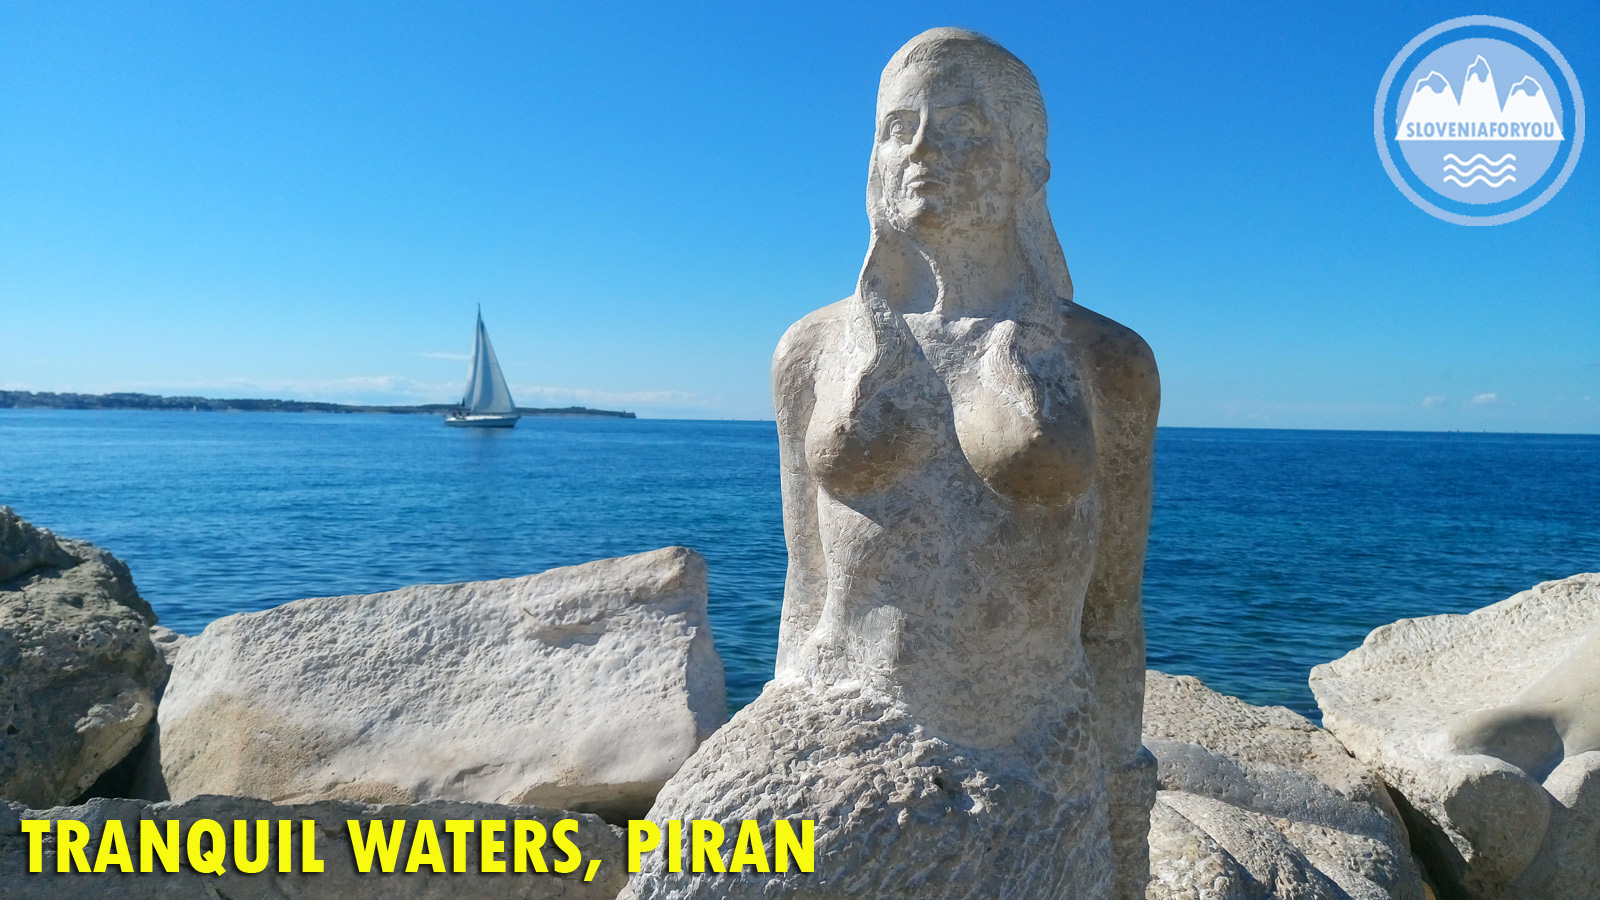 Statue by the Sea in Piran Sloveniaforyou